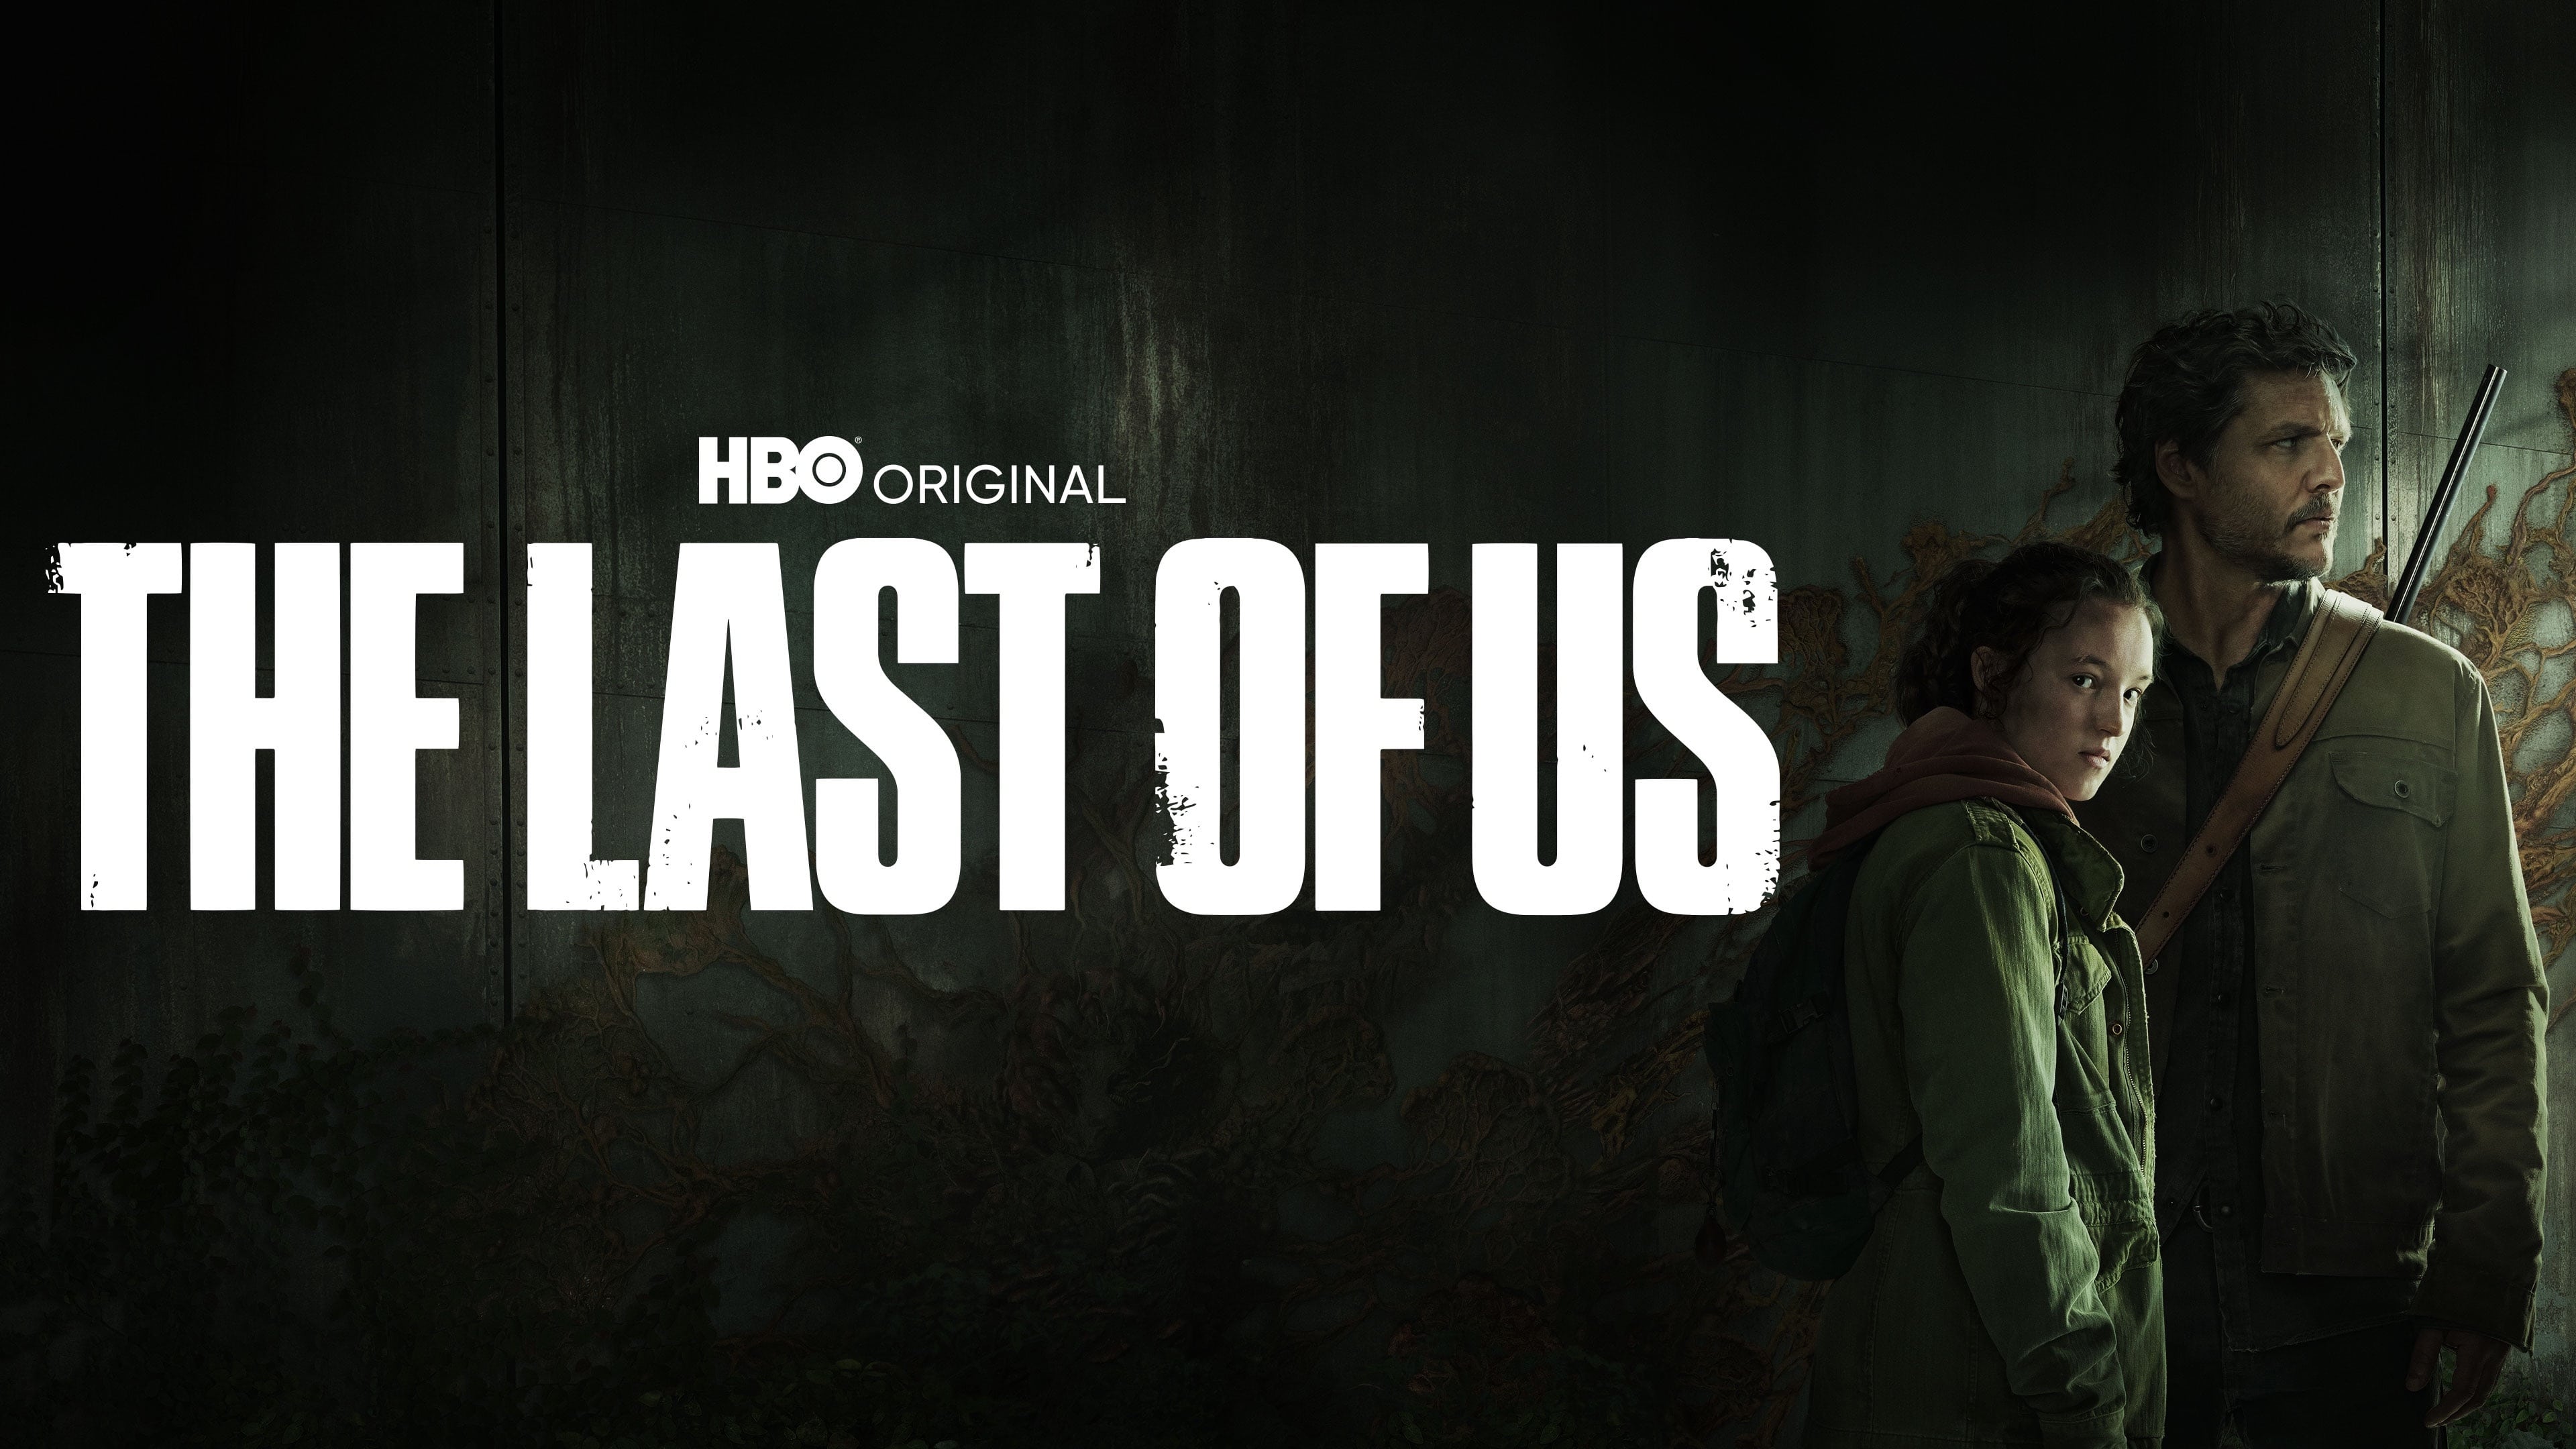 The Last of Us - Season 1 Episode 5